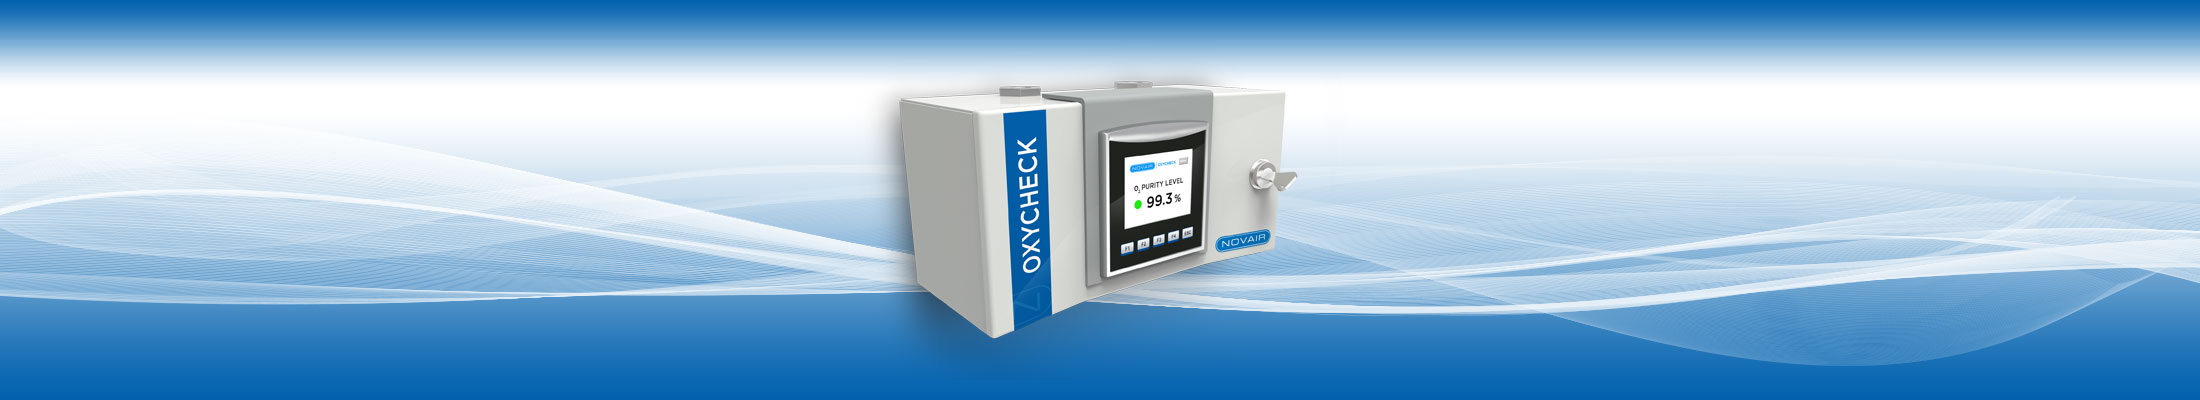 Analizador de oxígeno - OXYCHECK